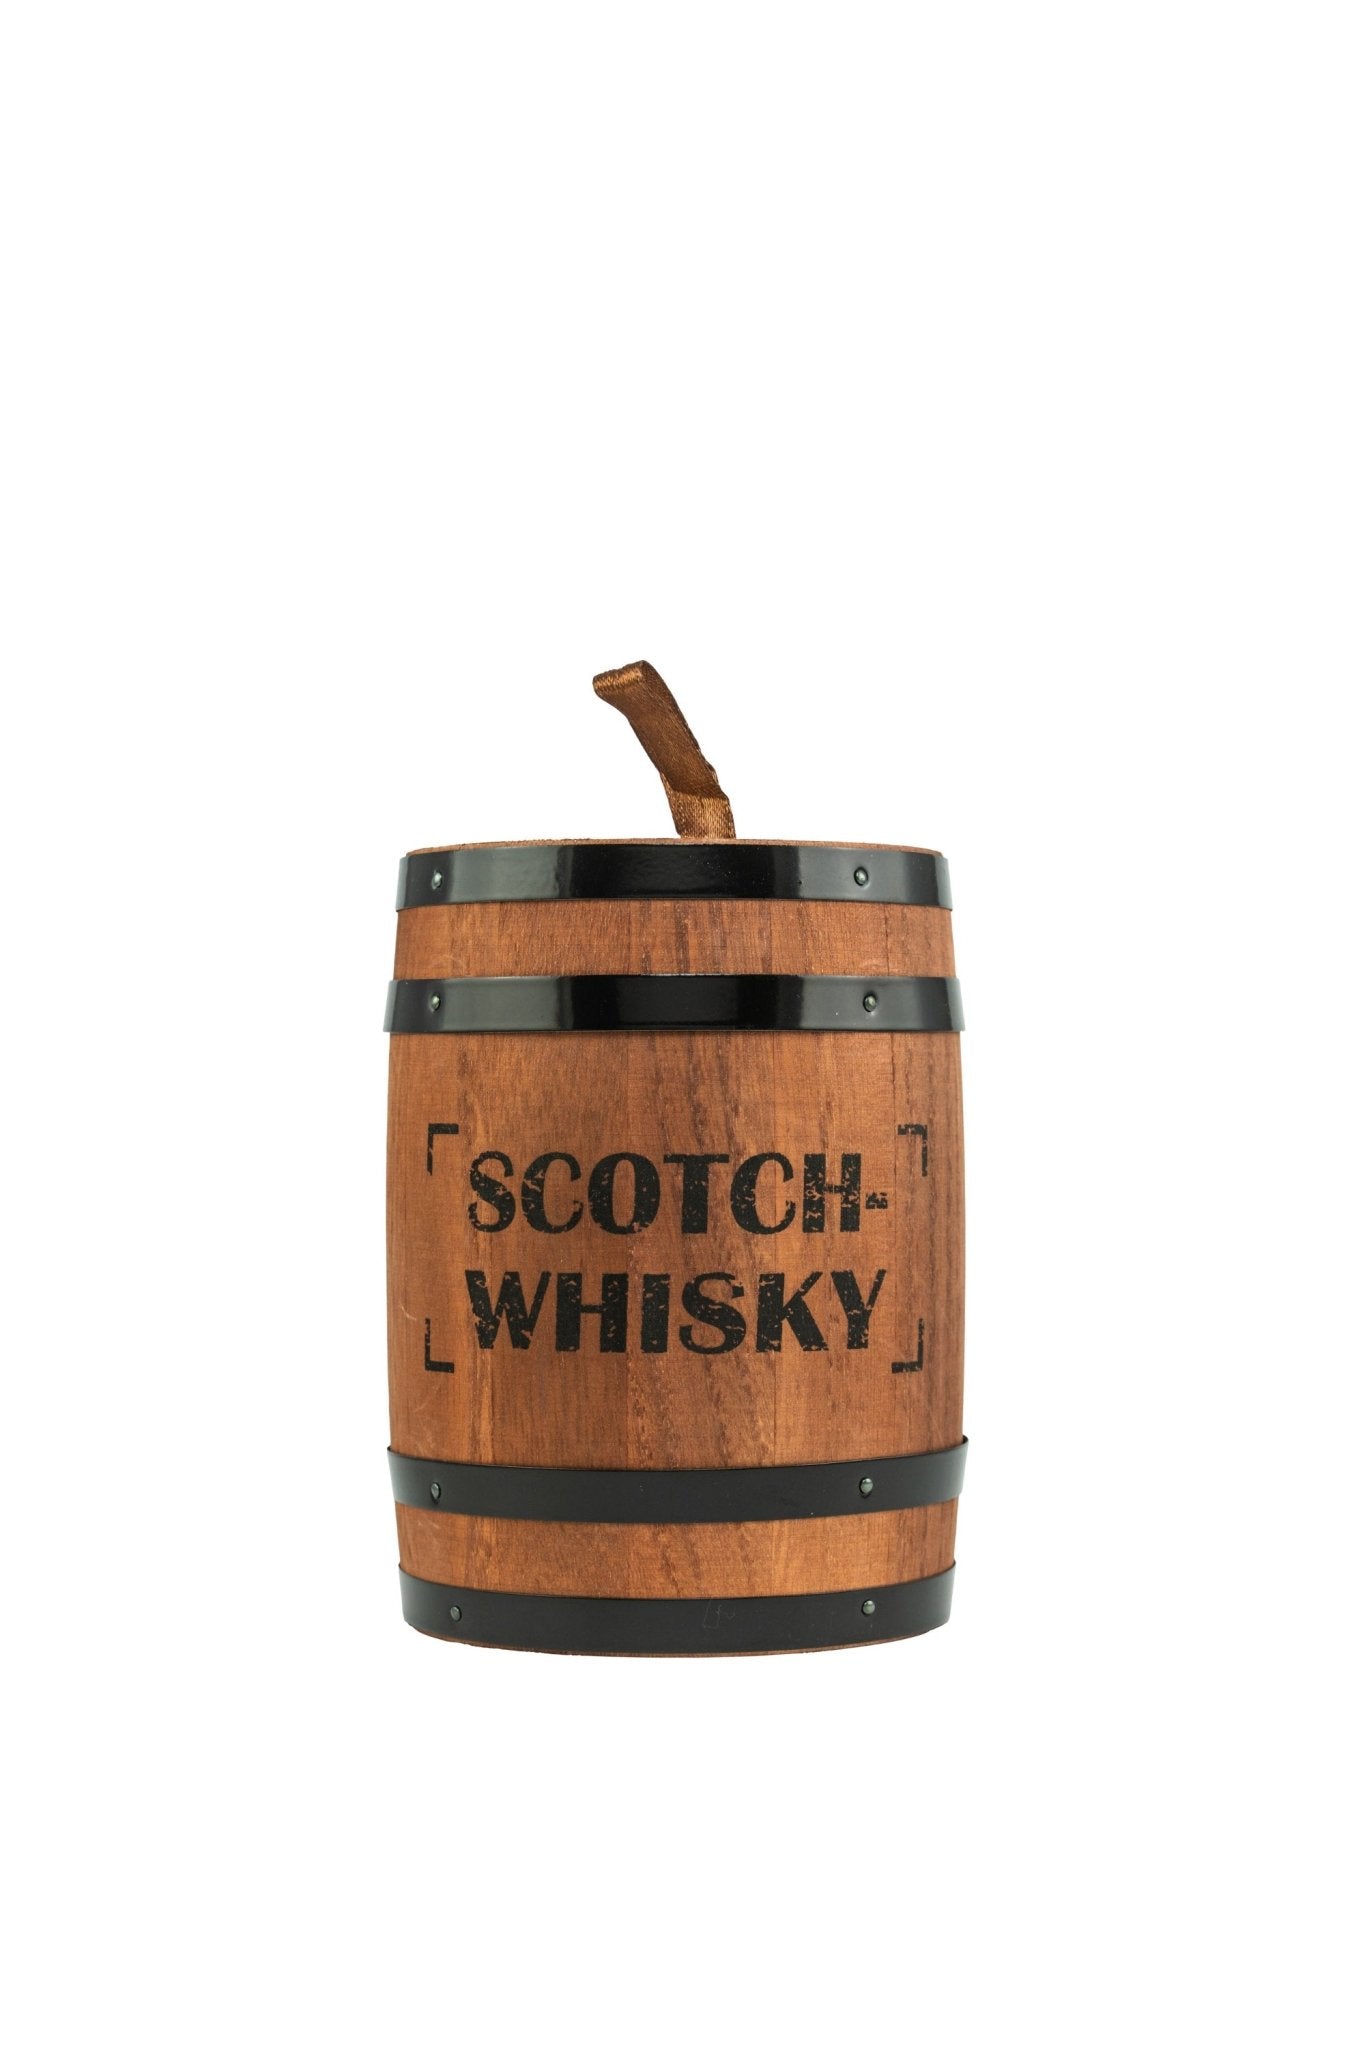 Scotch Whisky Tasting Fass Kirsch Import Taste24 7x20ml - Maltimore